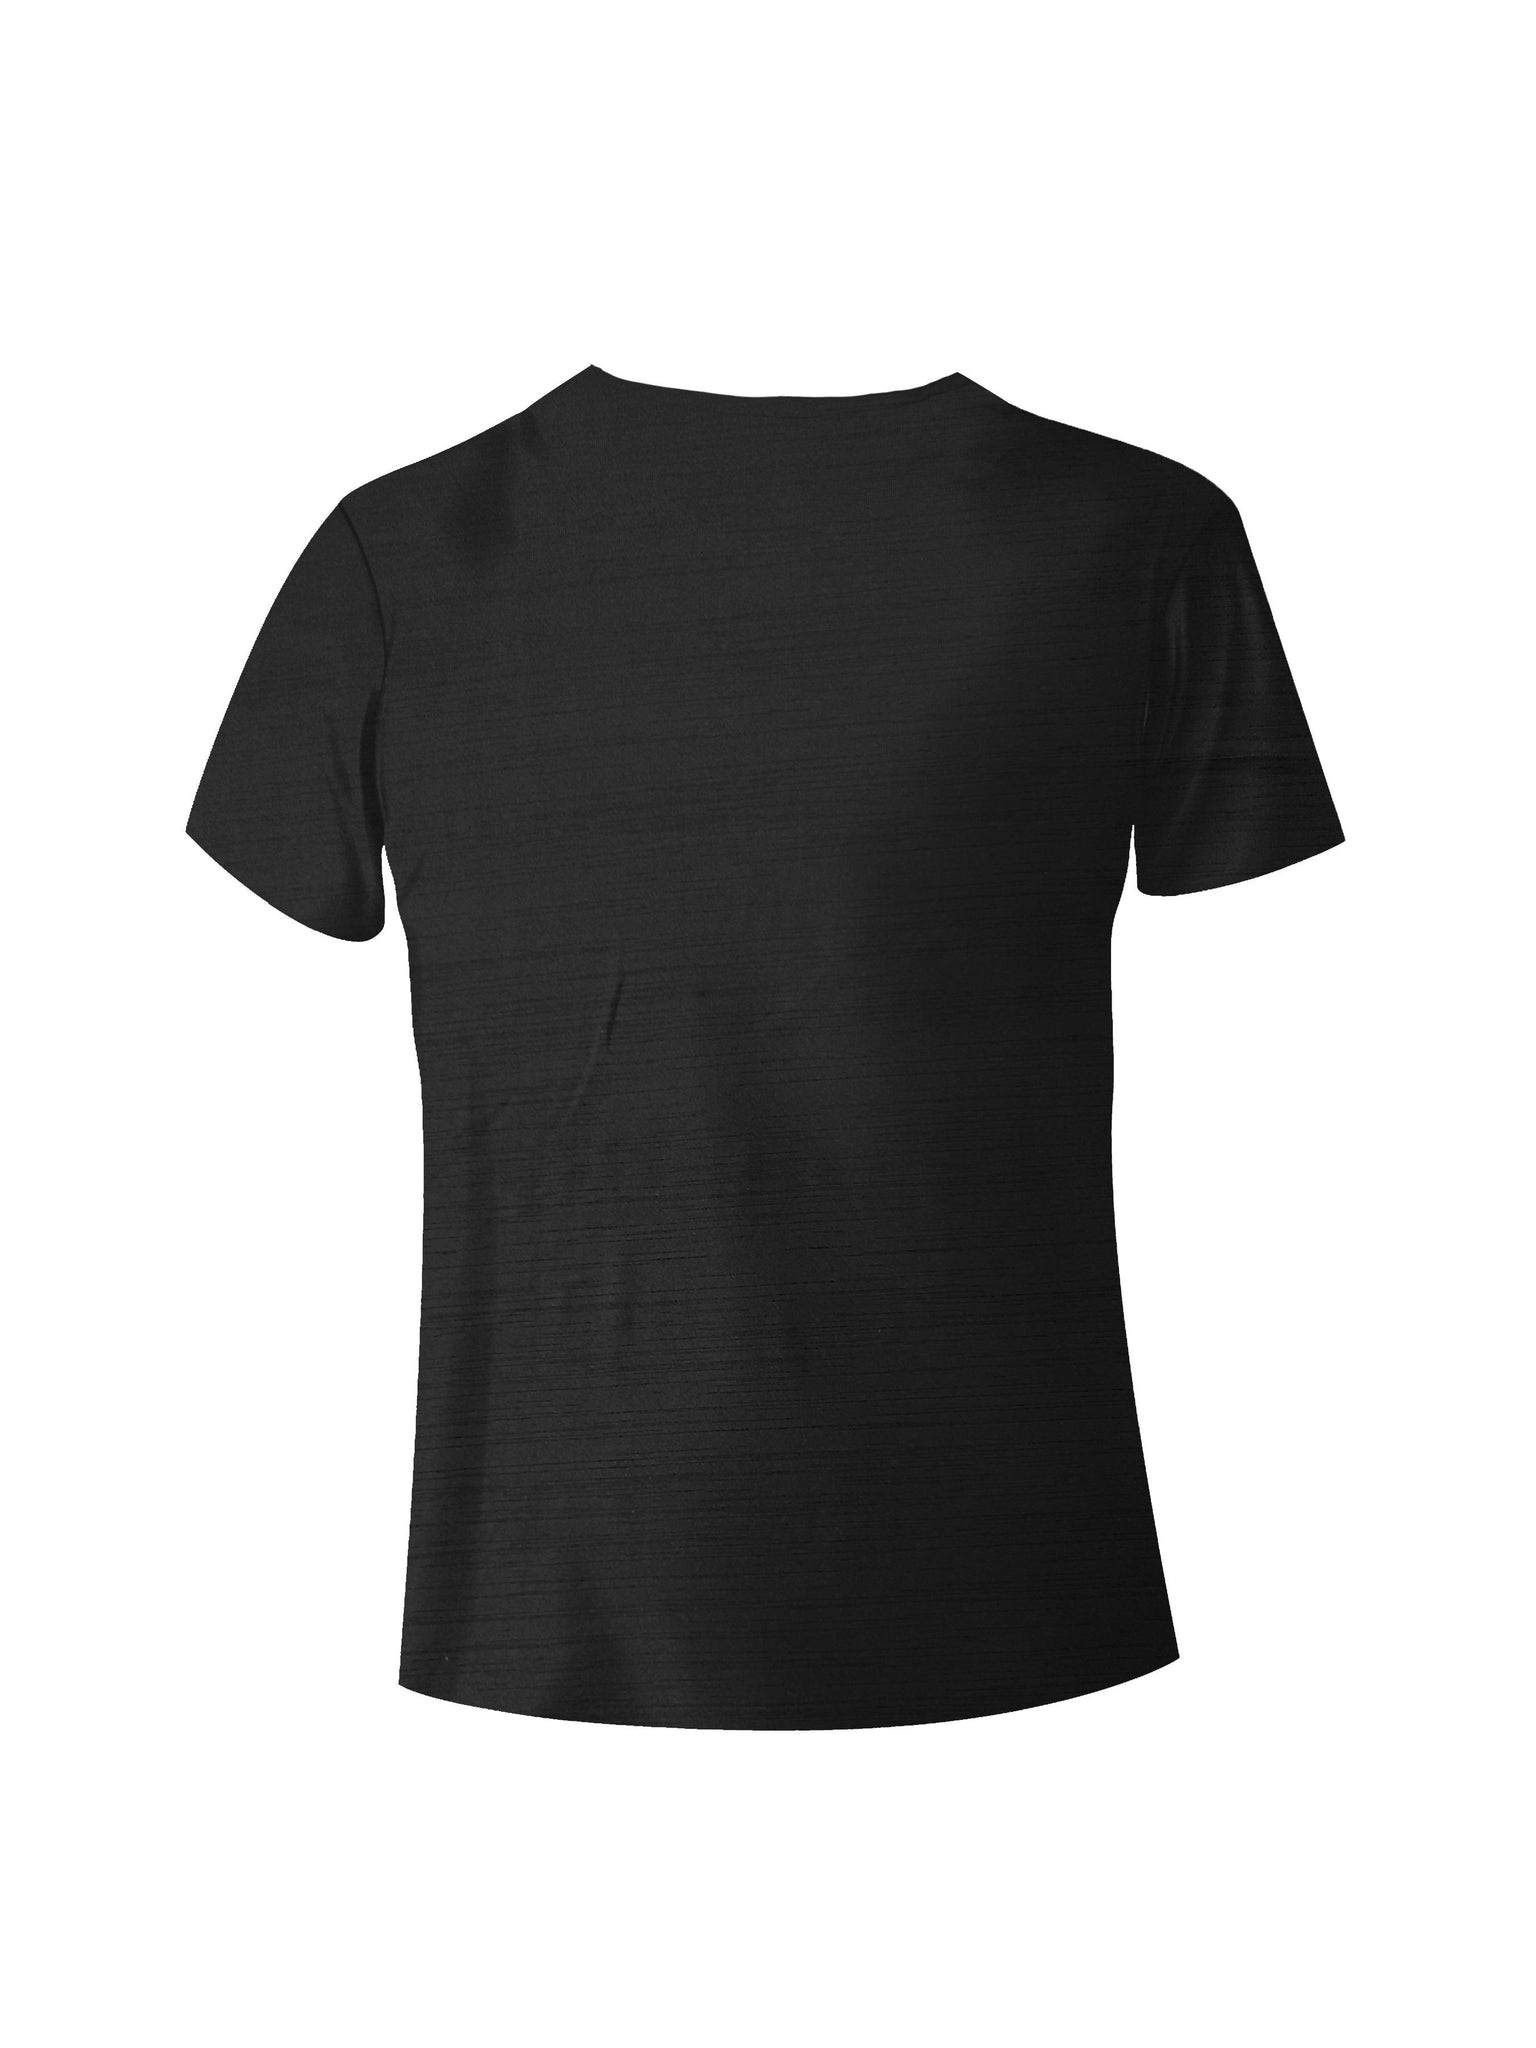 Men's Half Sleeve T-shirt Solid Black - Aadhitri